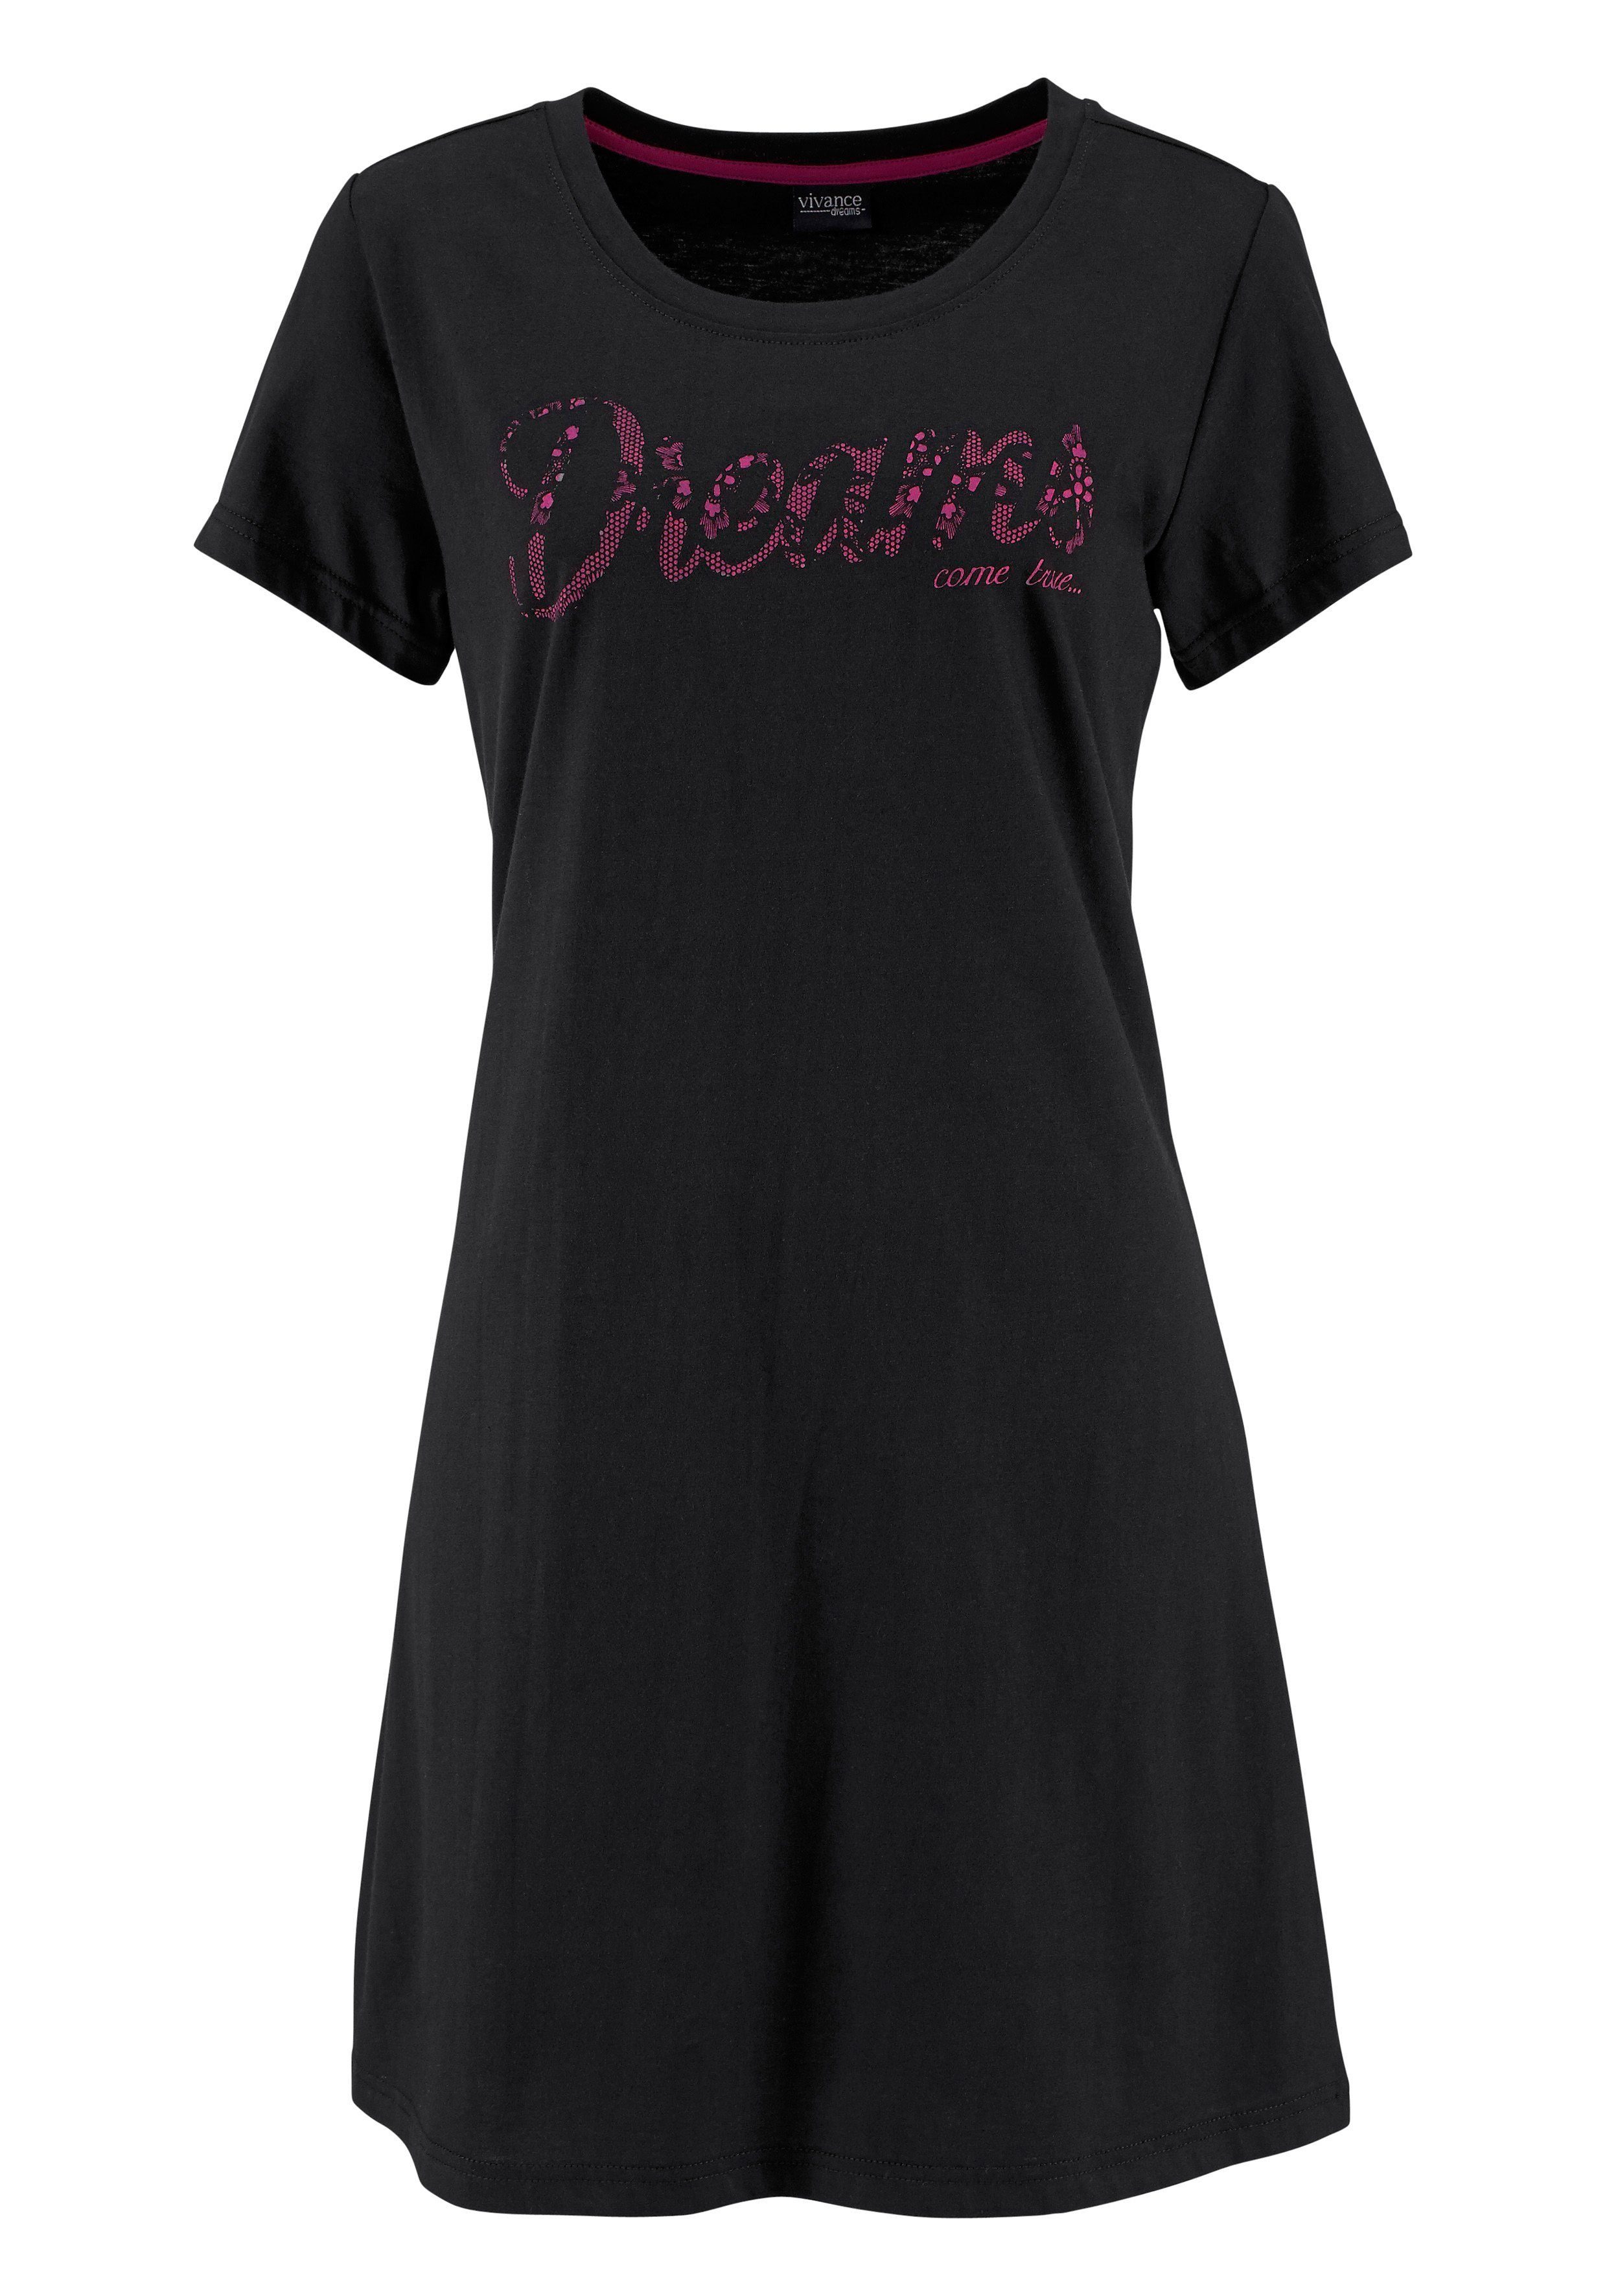 Vivance Dreams Spitzenoptik schwarz pink, in (2er-Pack) Print mit Sleepshirt